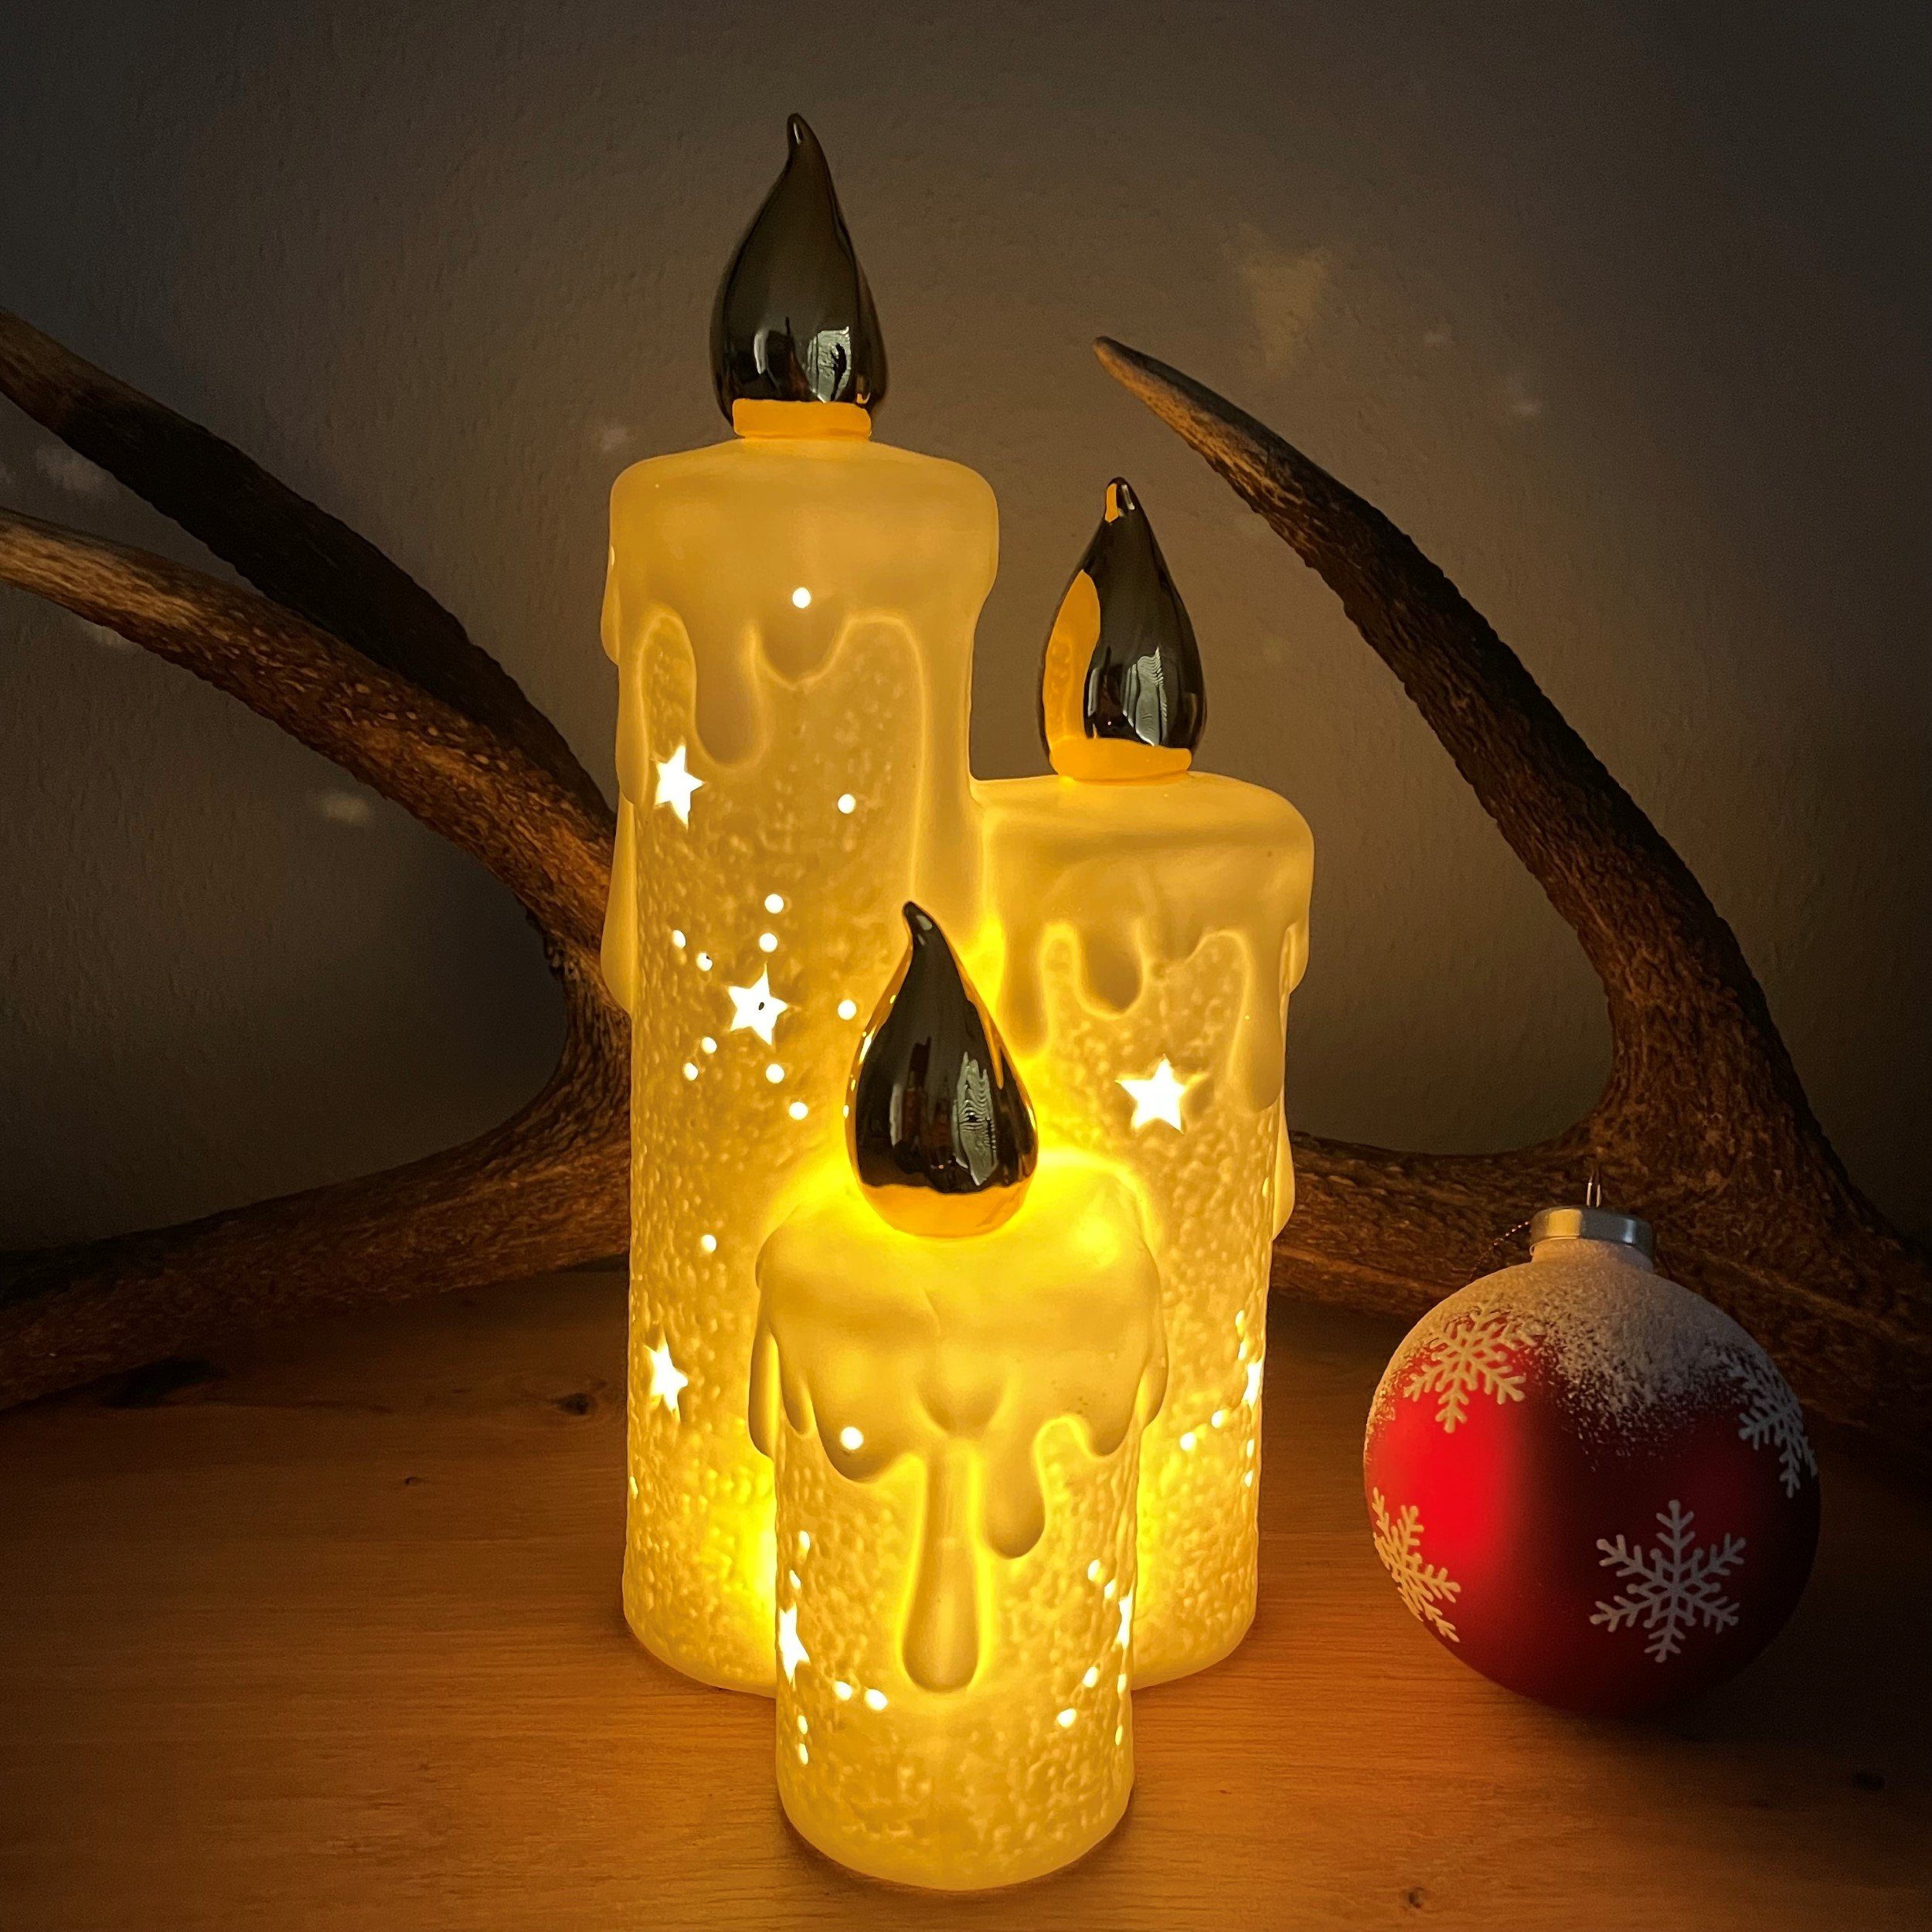 Online-Fuchs LED Dekoobjekt als 3 verschmolzene Kerzen-Optik aus Keramik  mit LED Beleuchtung 202, LED fest integriert, goldene Flamme, warmweiß,  Maße: 28x12x12 cm, ausgestanzte Sterne und Schneeflocken